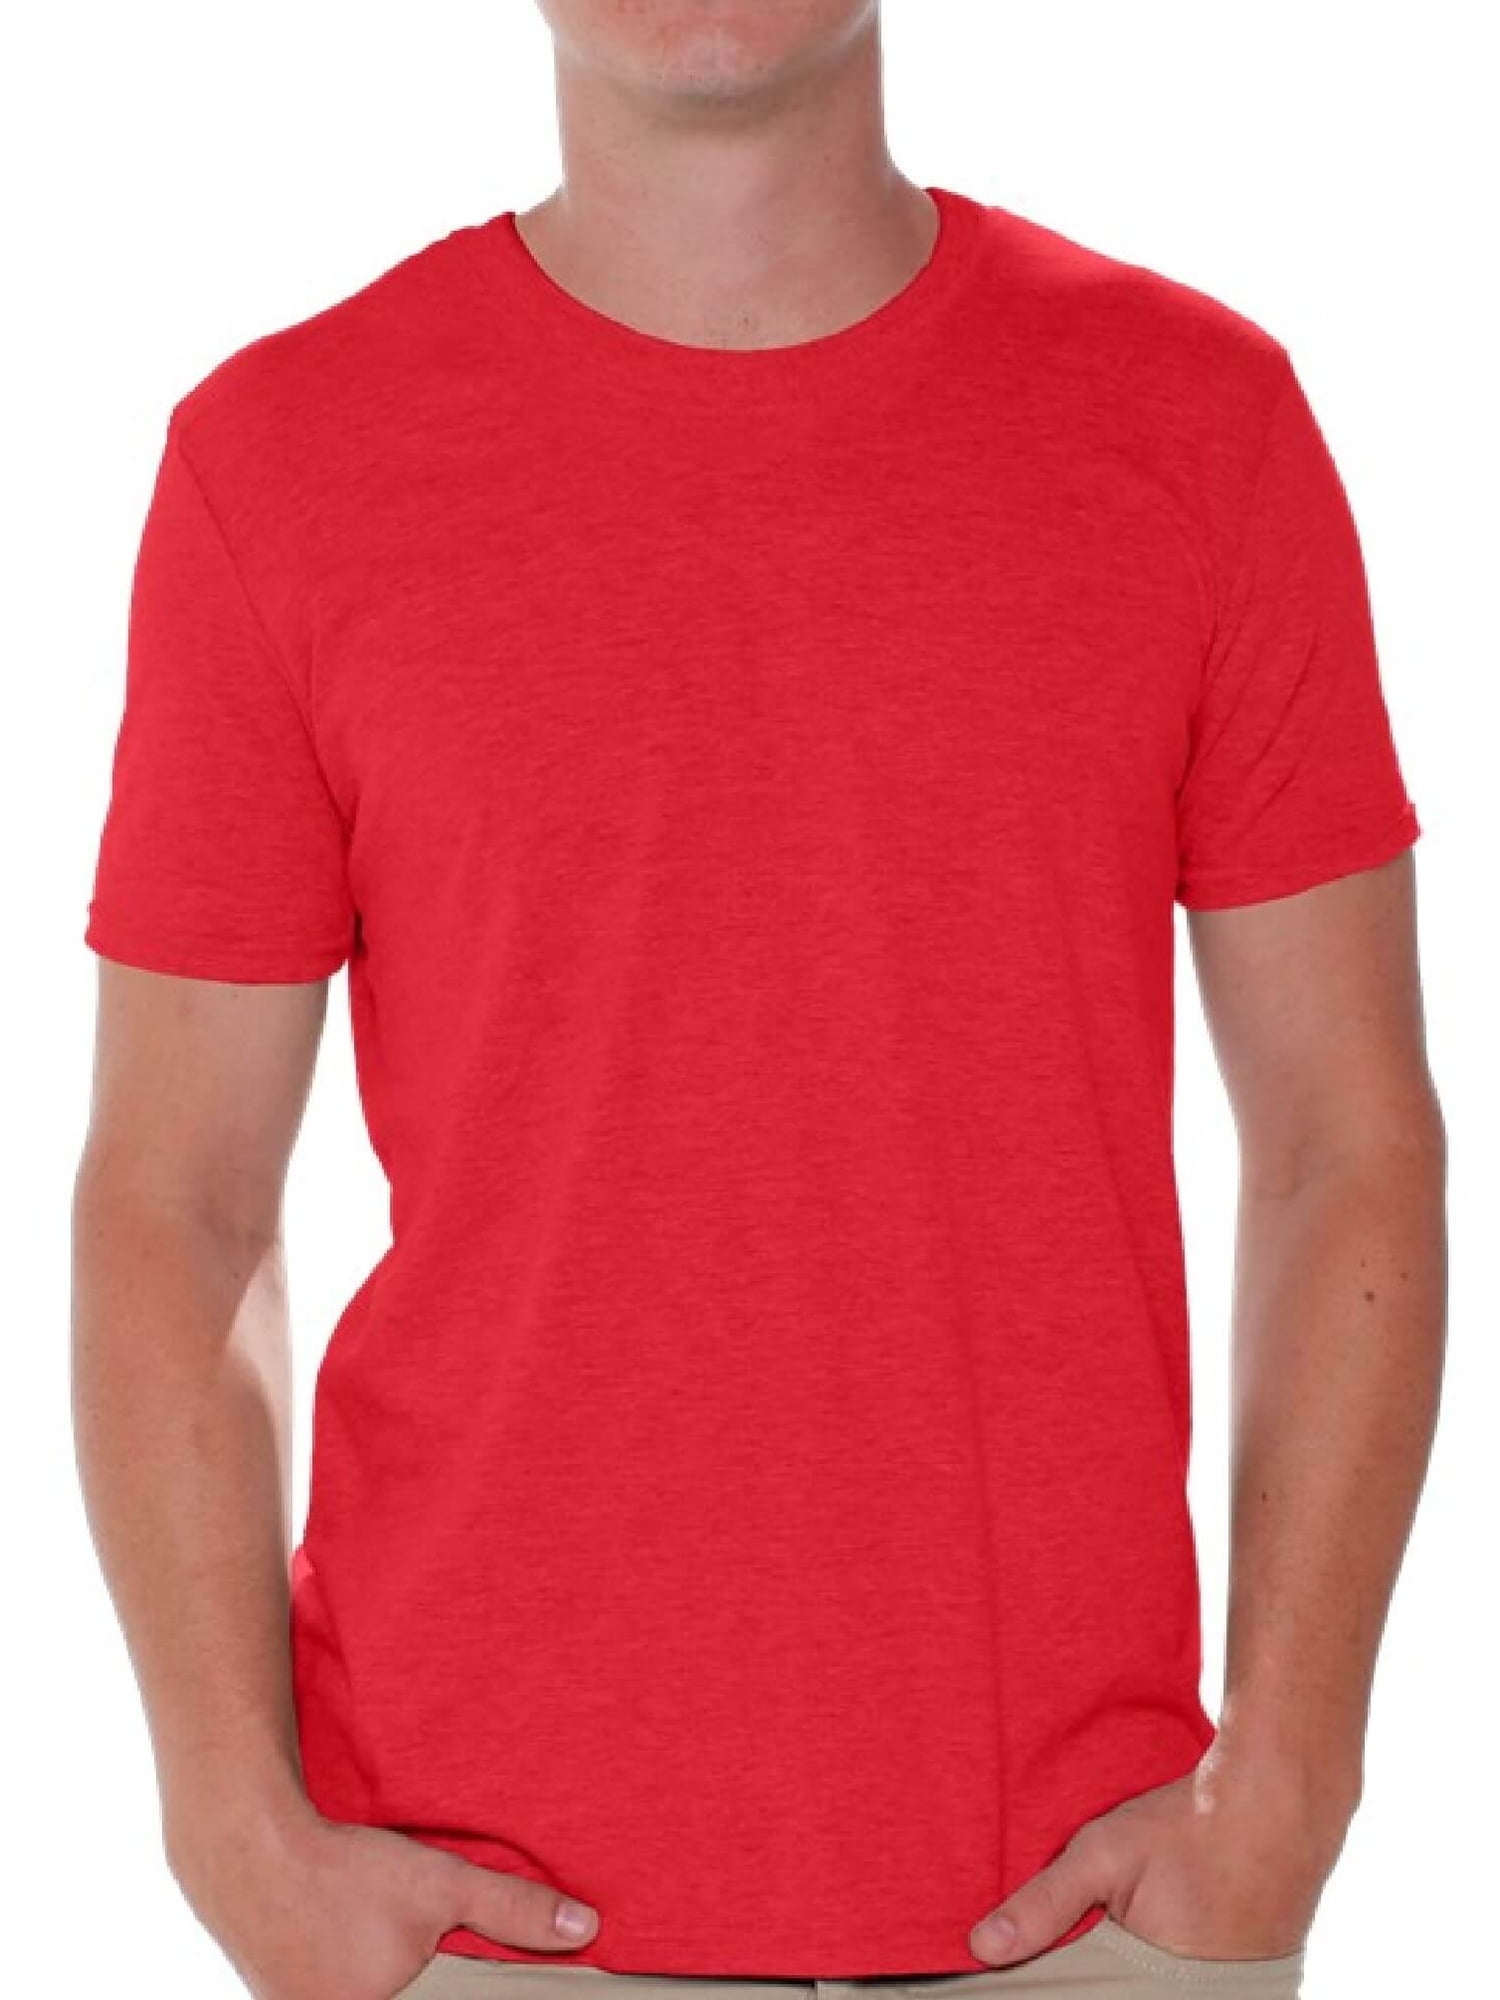 Gildan Shirts for Men Short Sleeve Tshirts Mens Classic Outwear Cotton  Men's Shirt Blank Tee Shirts 